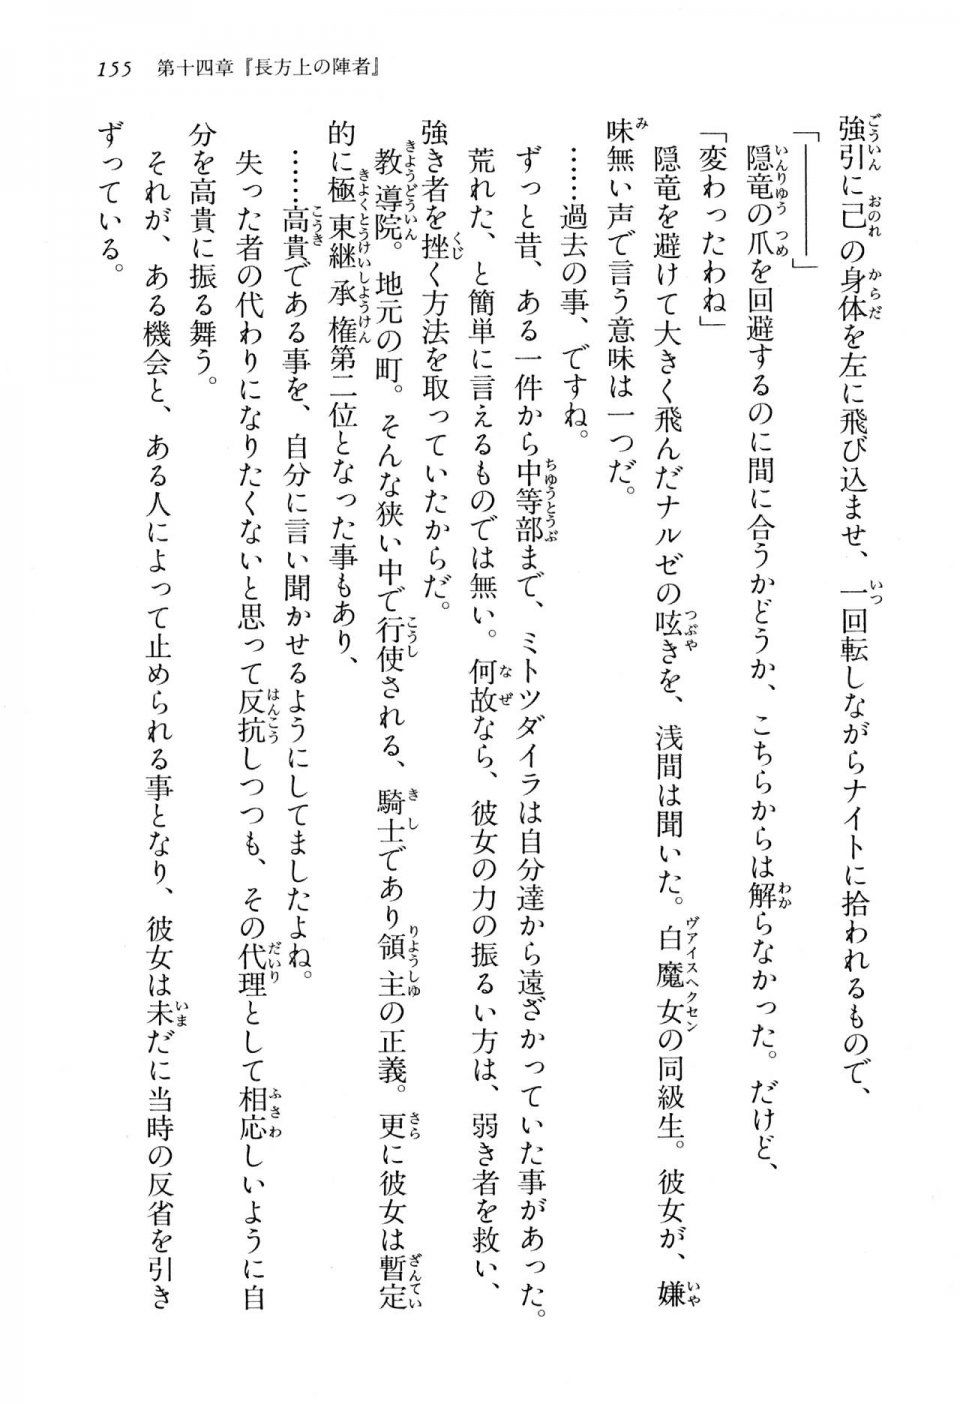 Kyoukai Senjou no Horizon BD Special Mininovel Vol 3(2A) - Photo #159